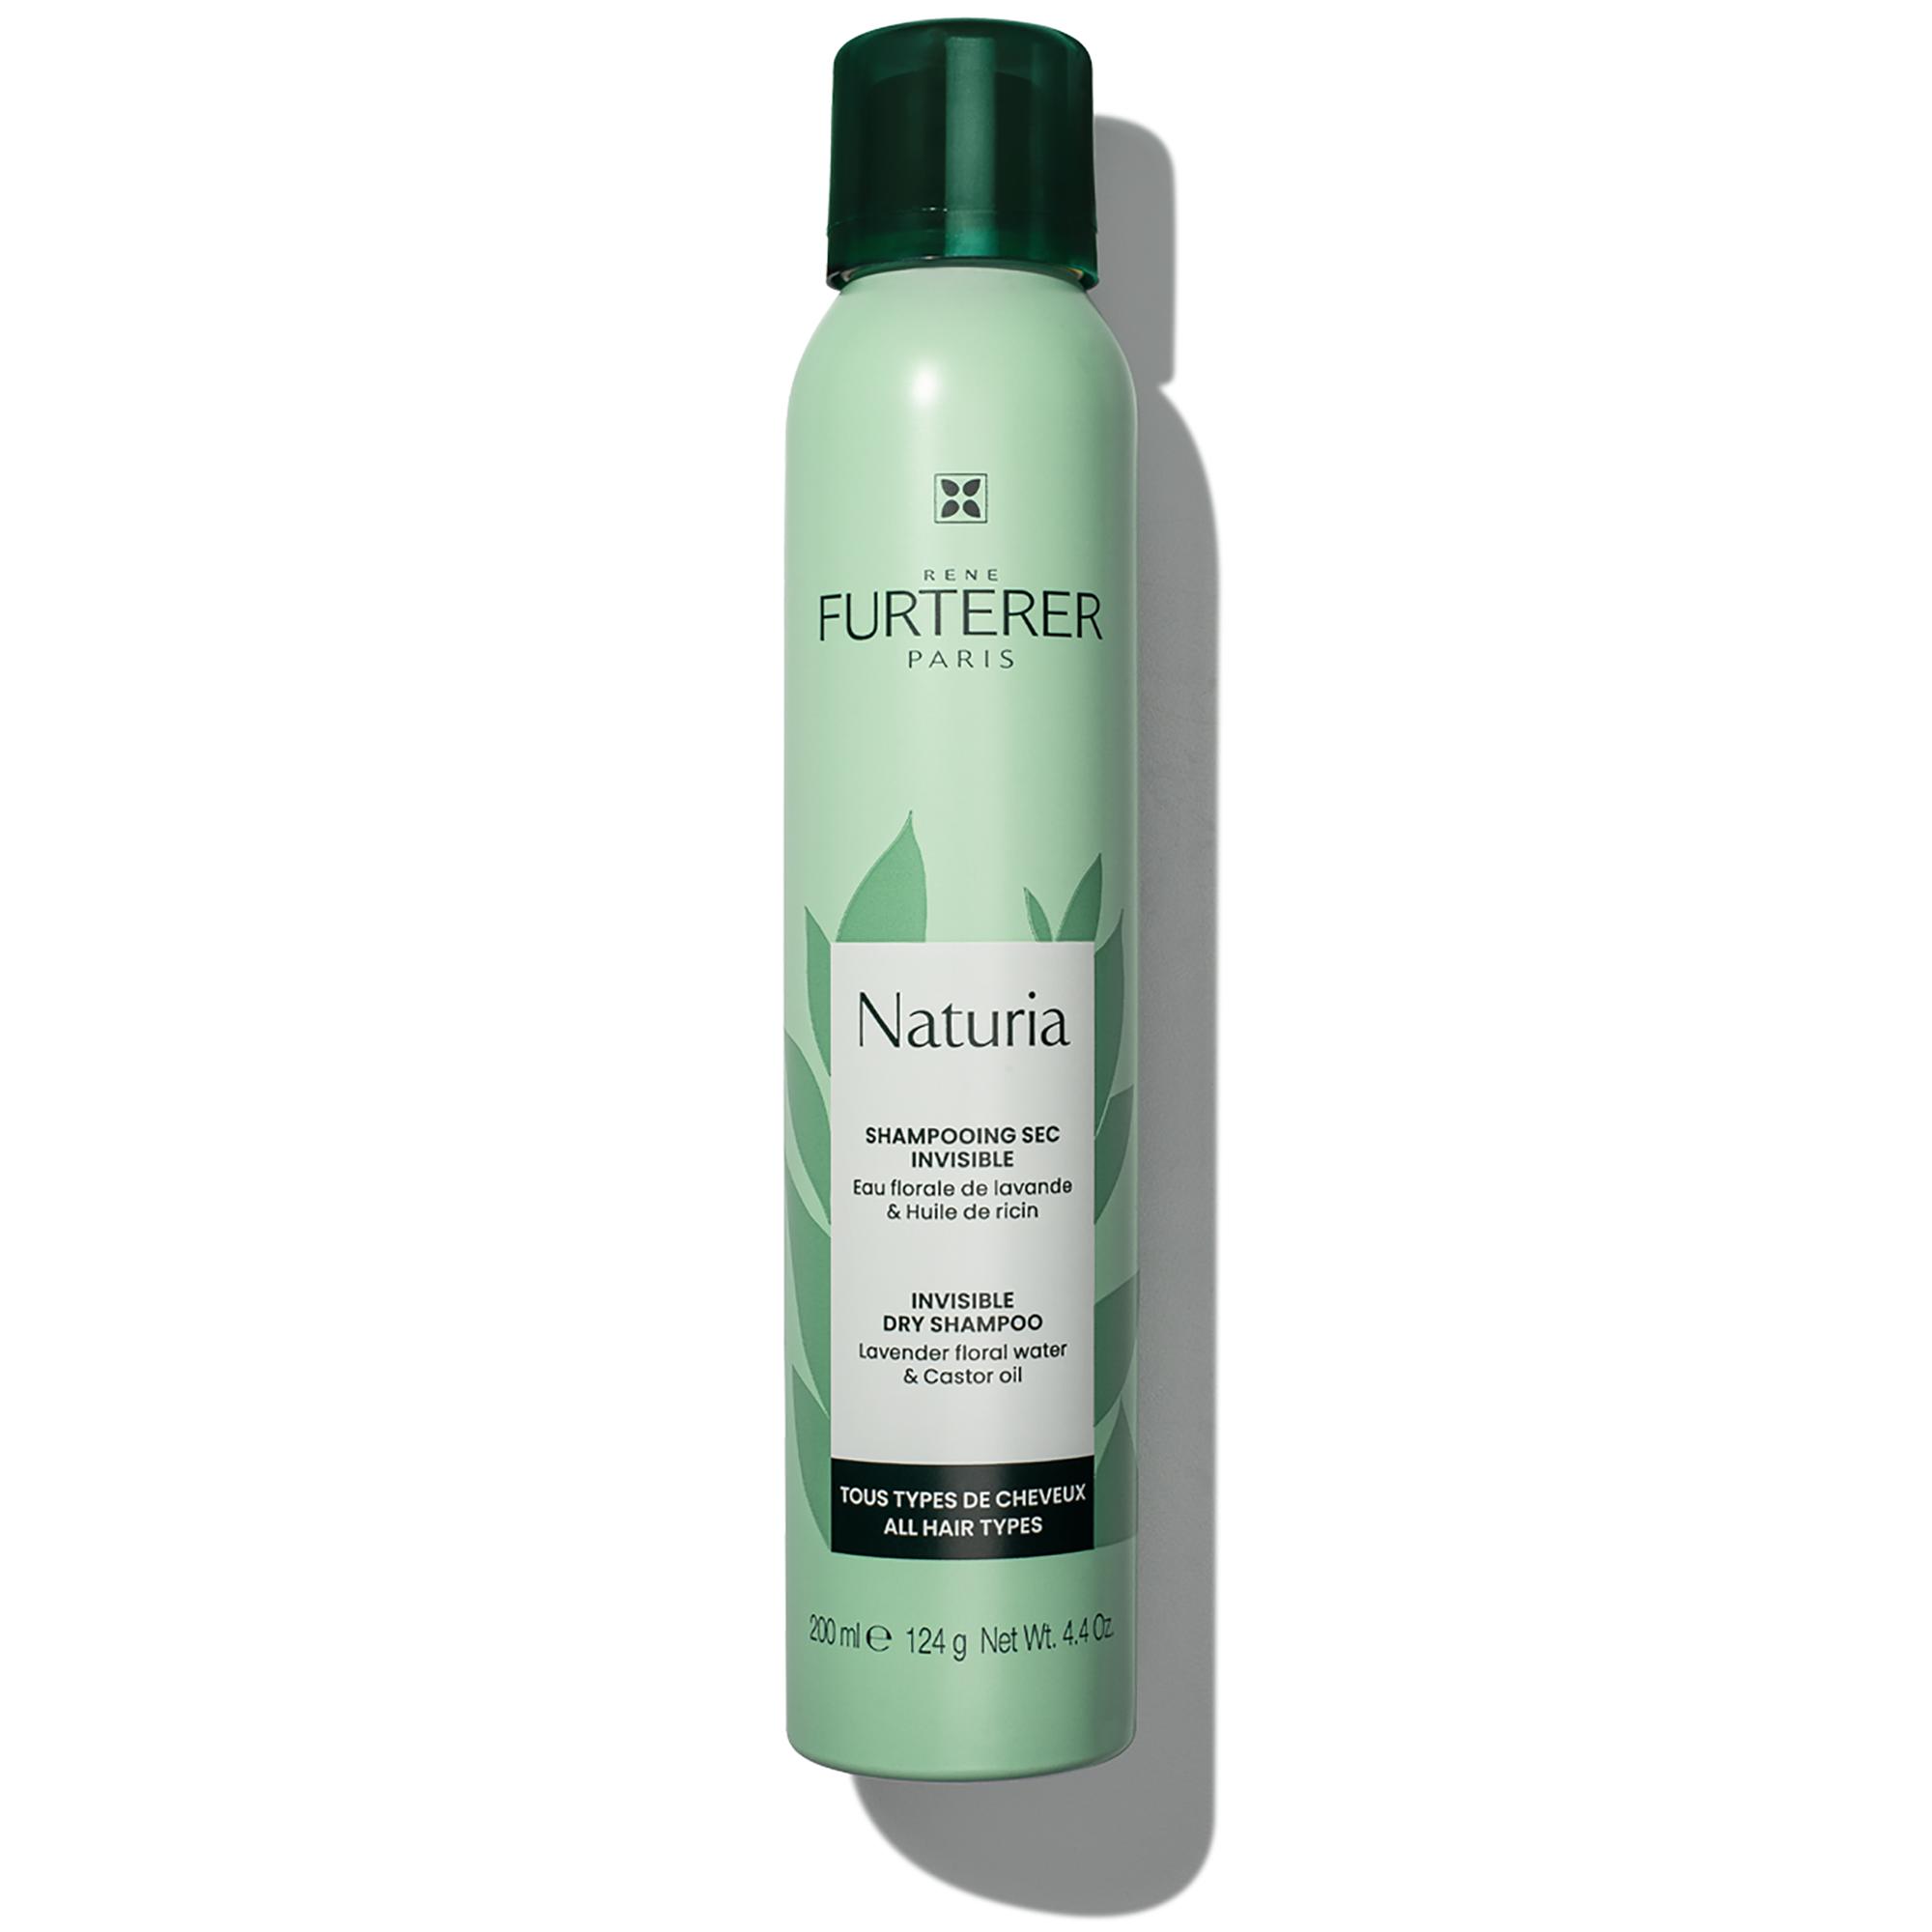 Rene Furterer Naturia Invisible Dry Shampoo / 200ML